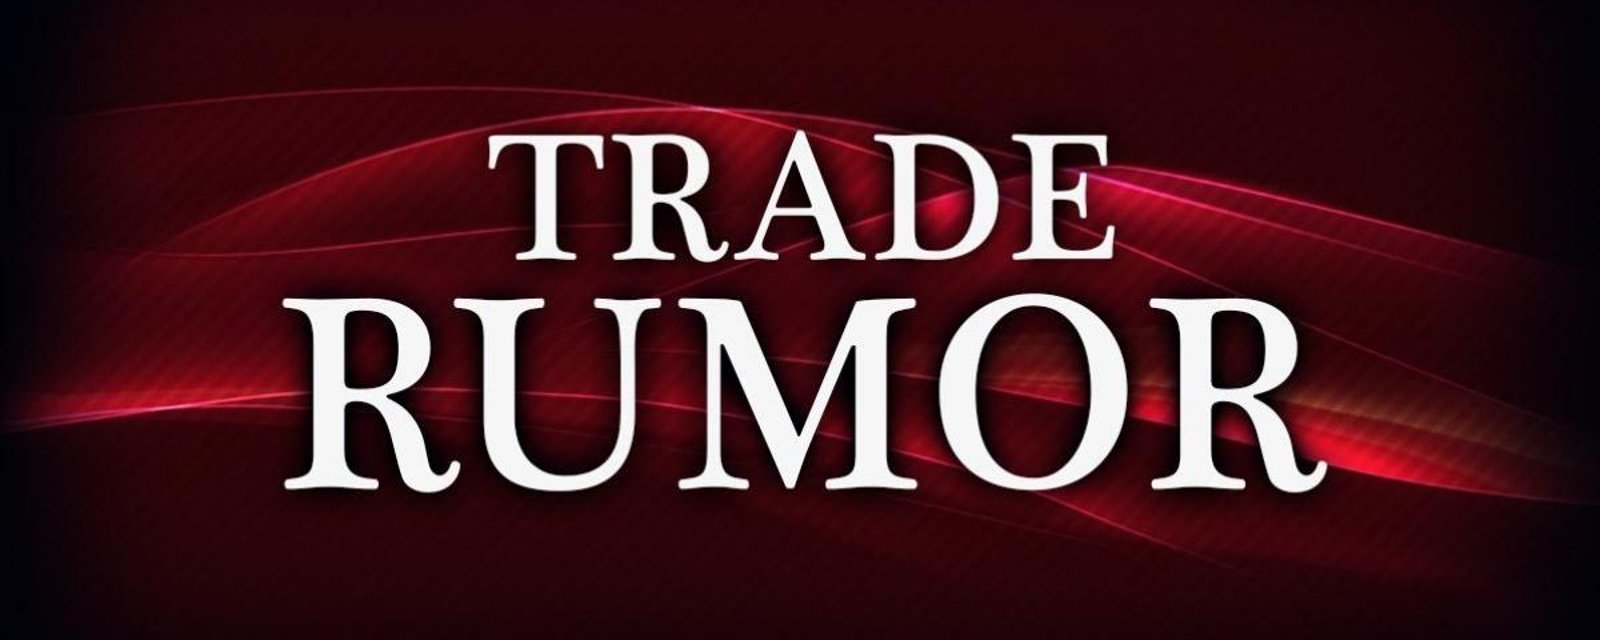 NHL GM calls out insider for false trade rumor, says “He's full of sh*t.”